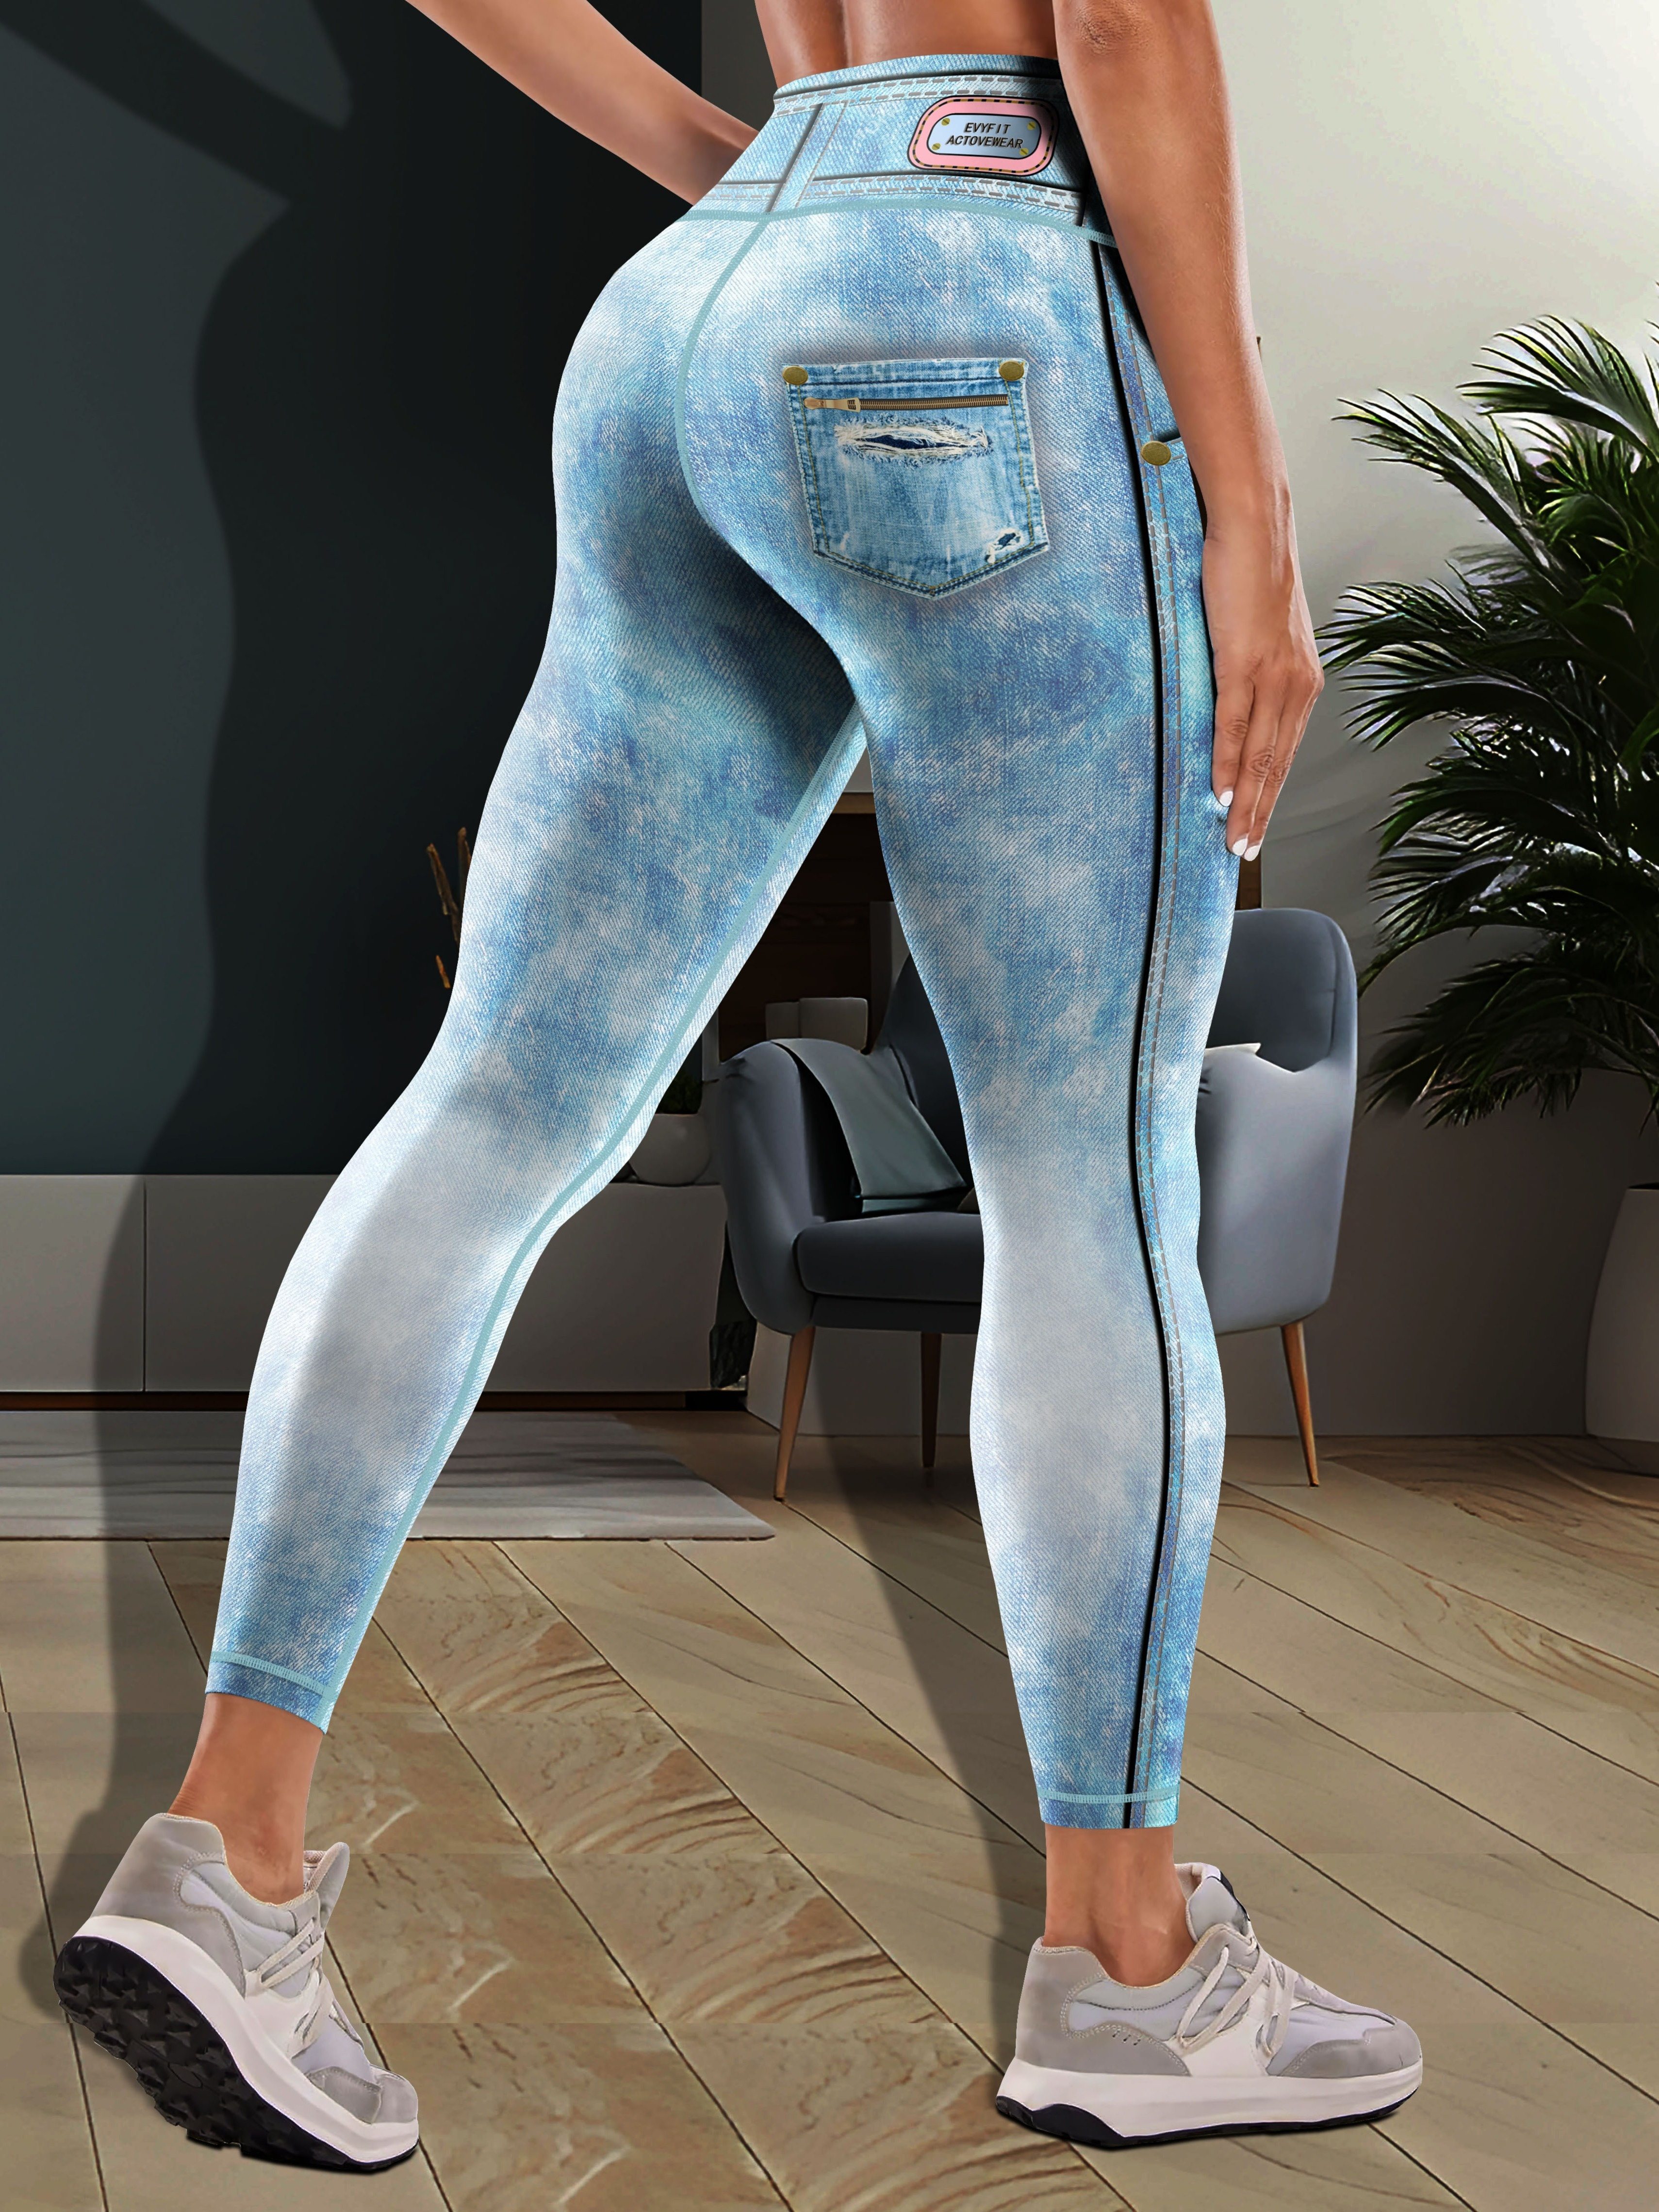 DeanFire Colorful Denim Jeans Print Women Yoga Pants Leggings Push Up  Running Sports Fitness Sexy Silm